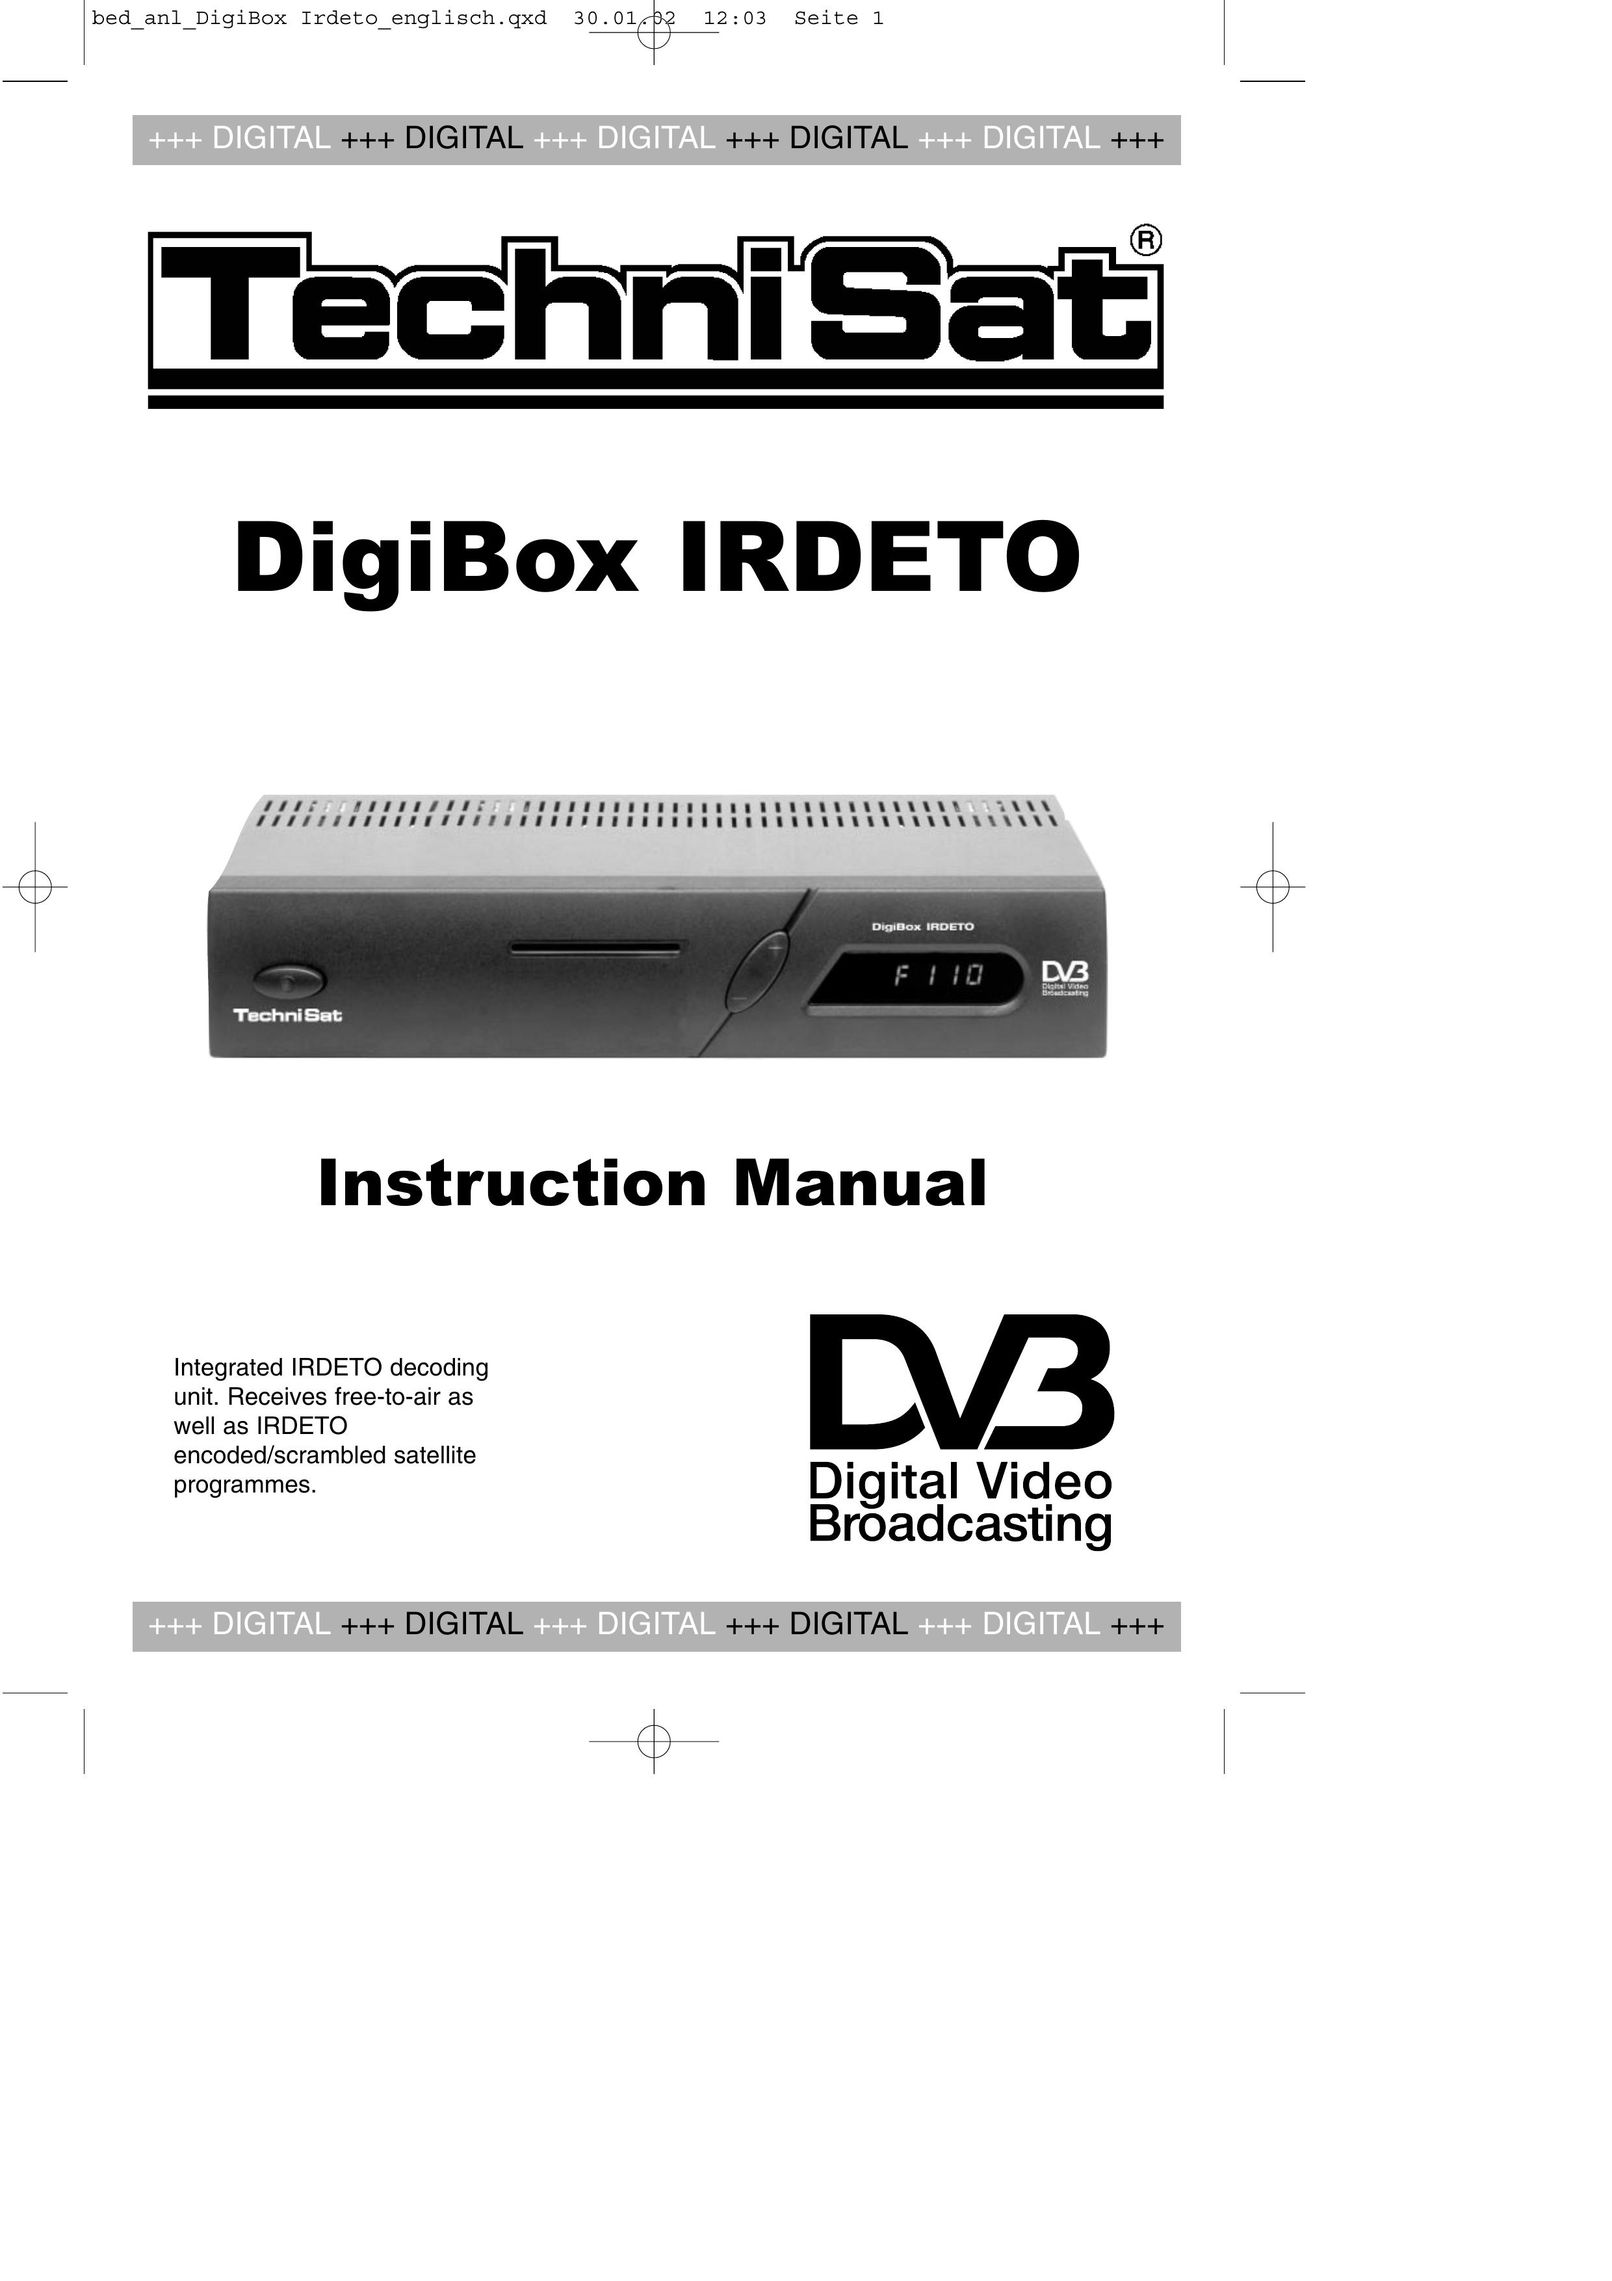 TechniSat Integrated IRDETO DVD Player User Manual